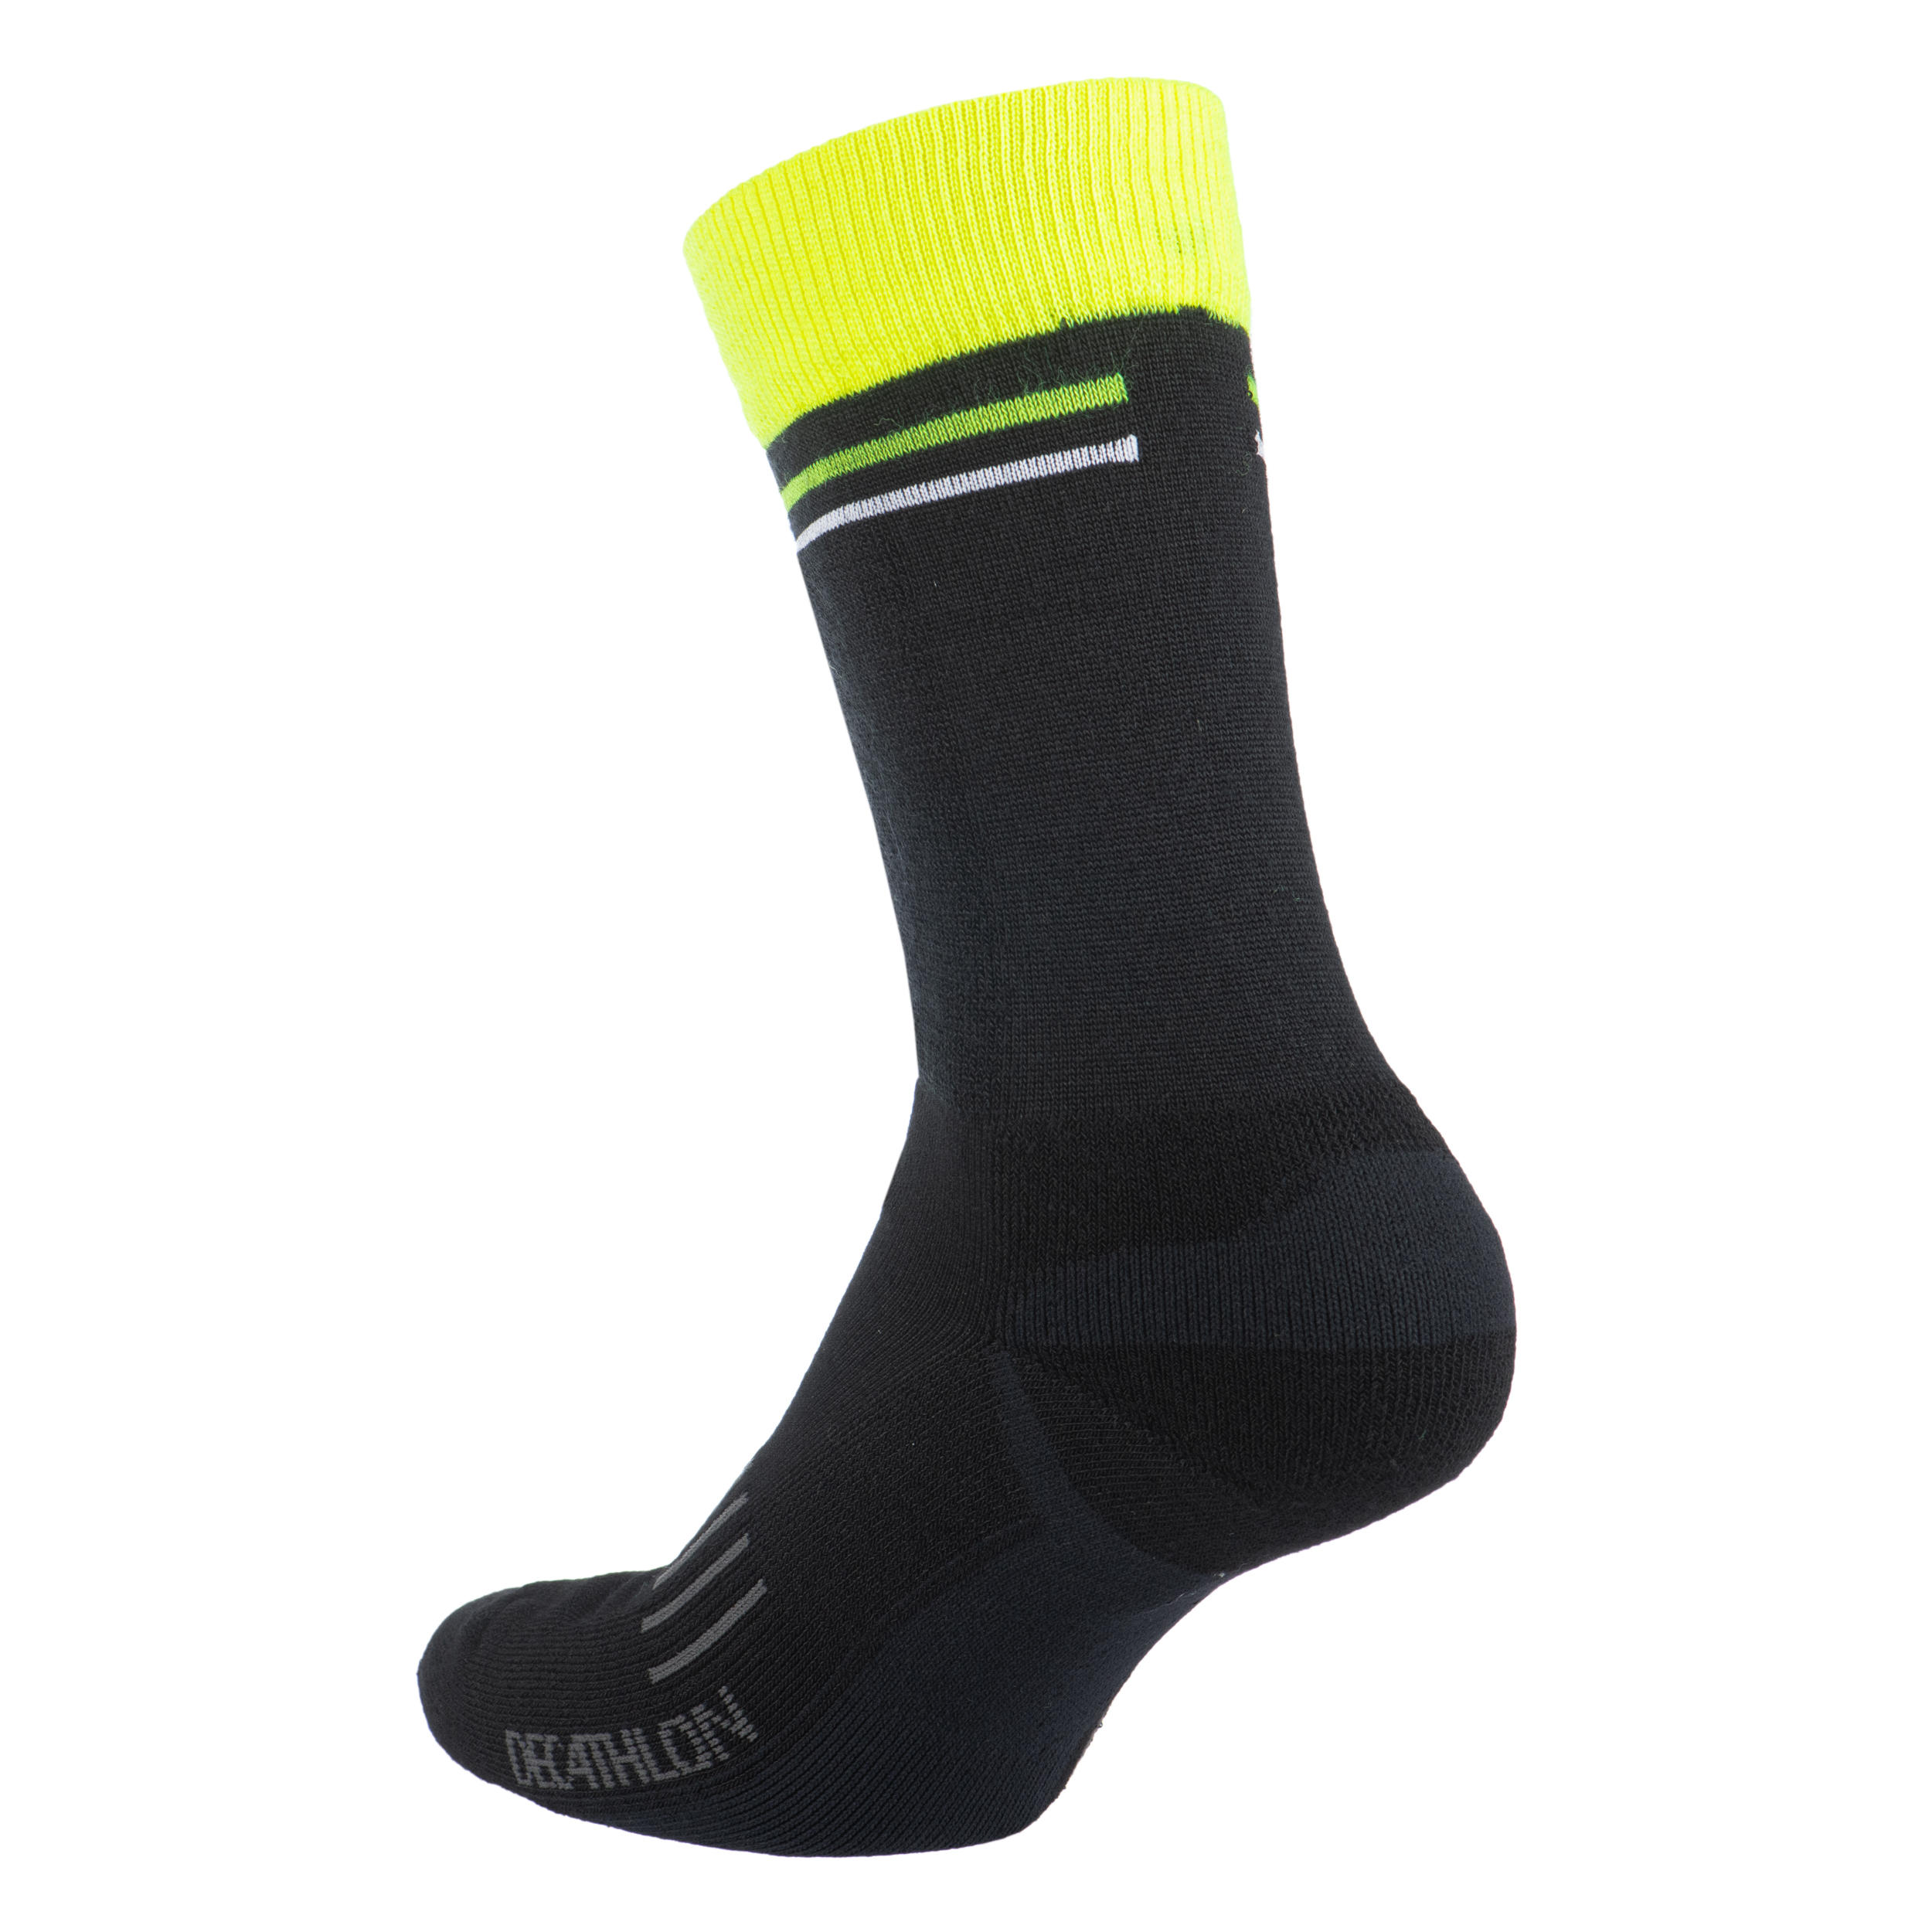 900 Winter Cycling Socks - Black/Yellow 3/3